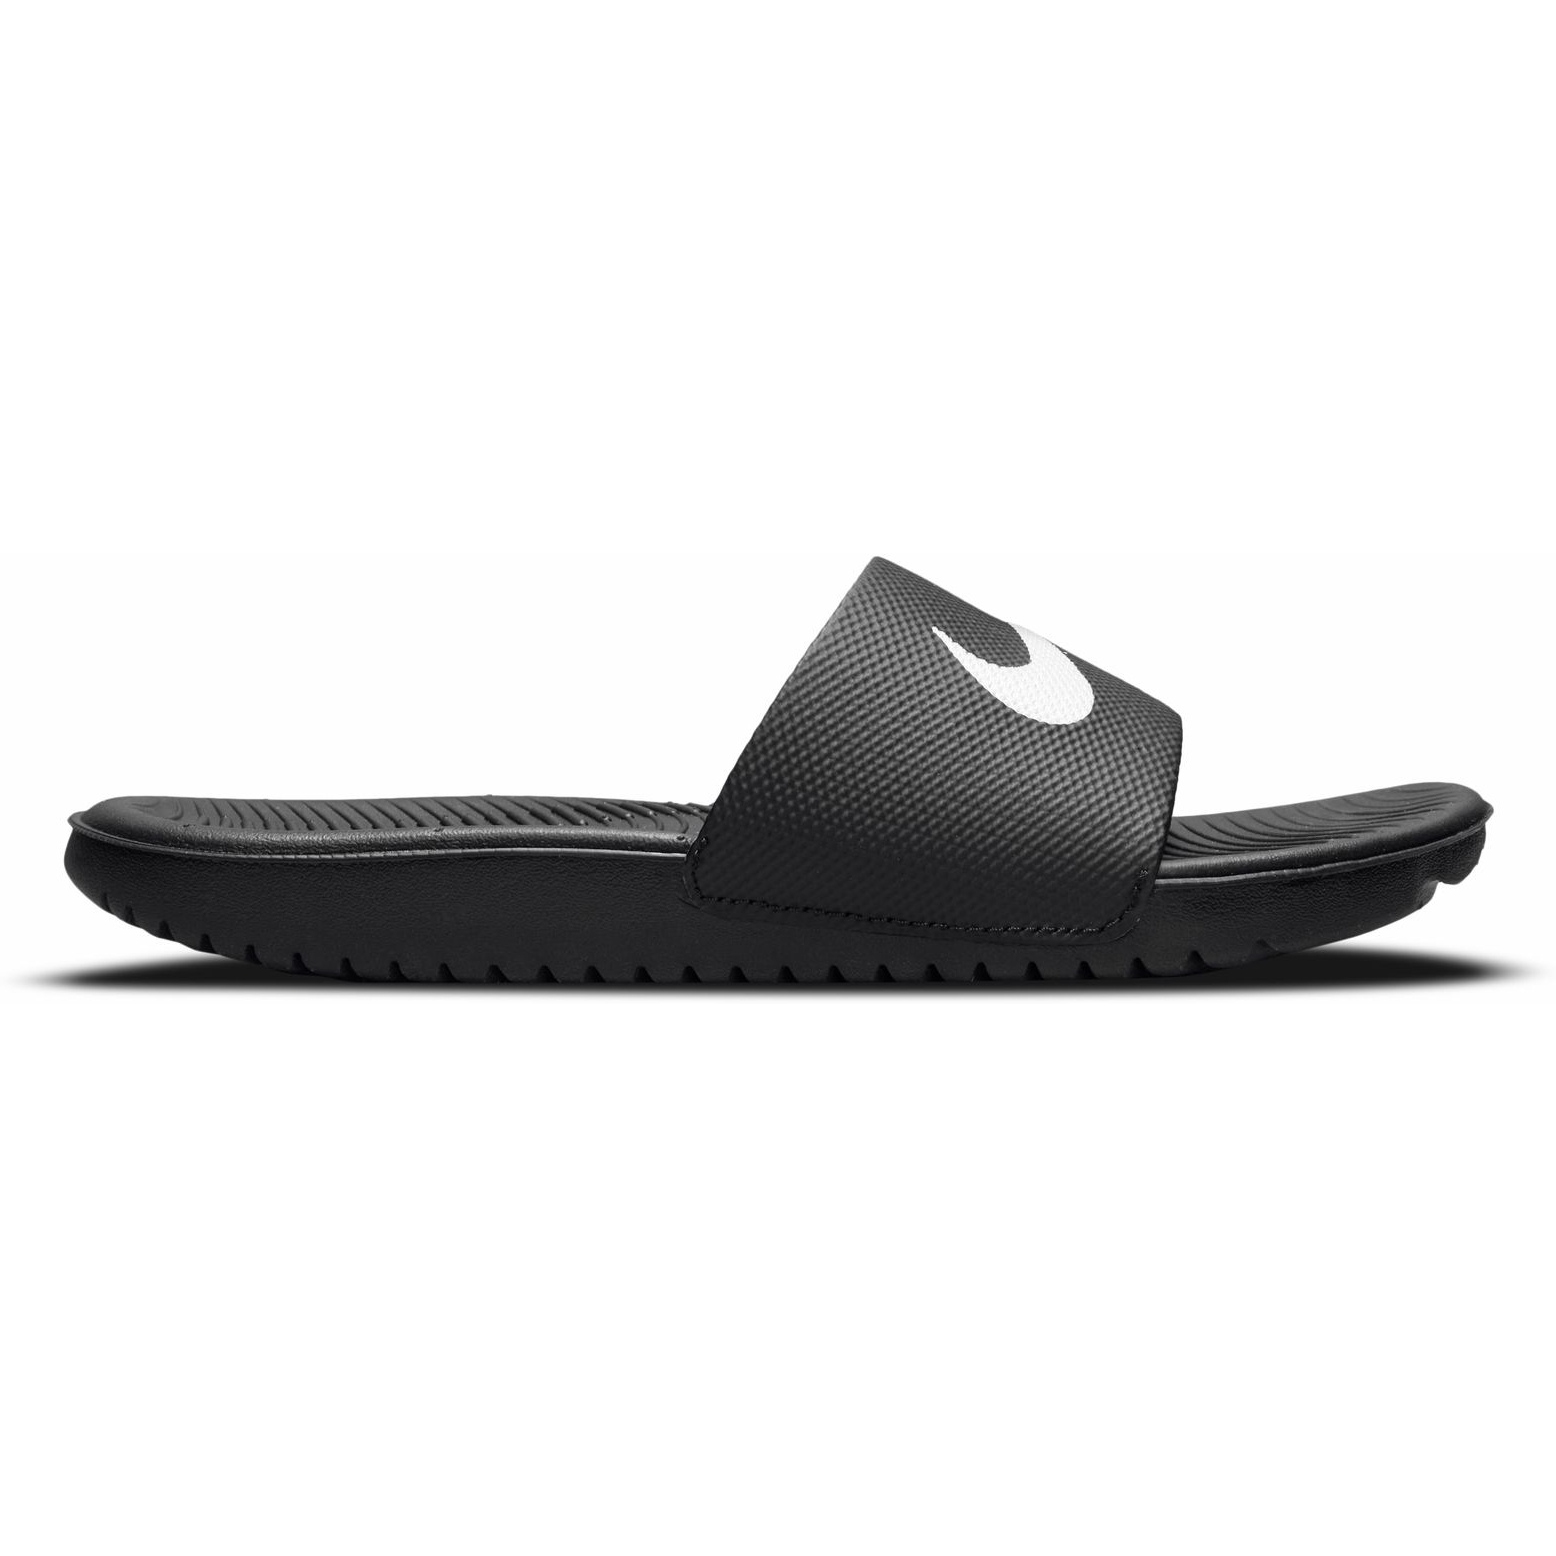 Productfoto van Nike Kawa Slippers Kinderen - zwart/wit 819352-001